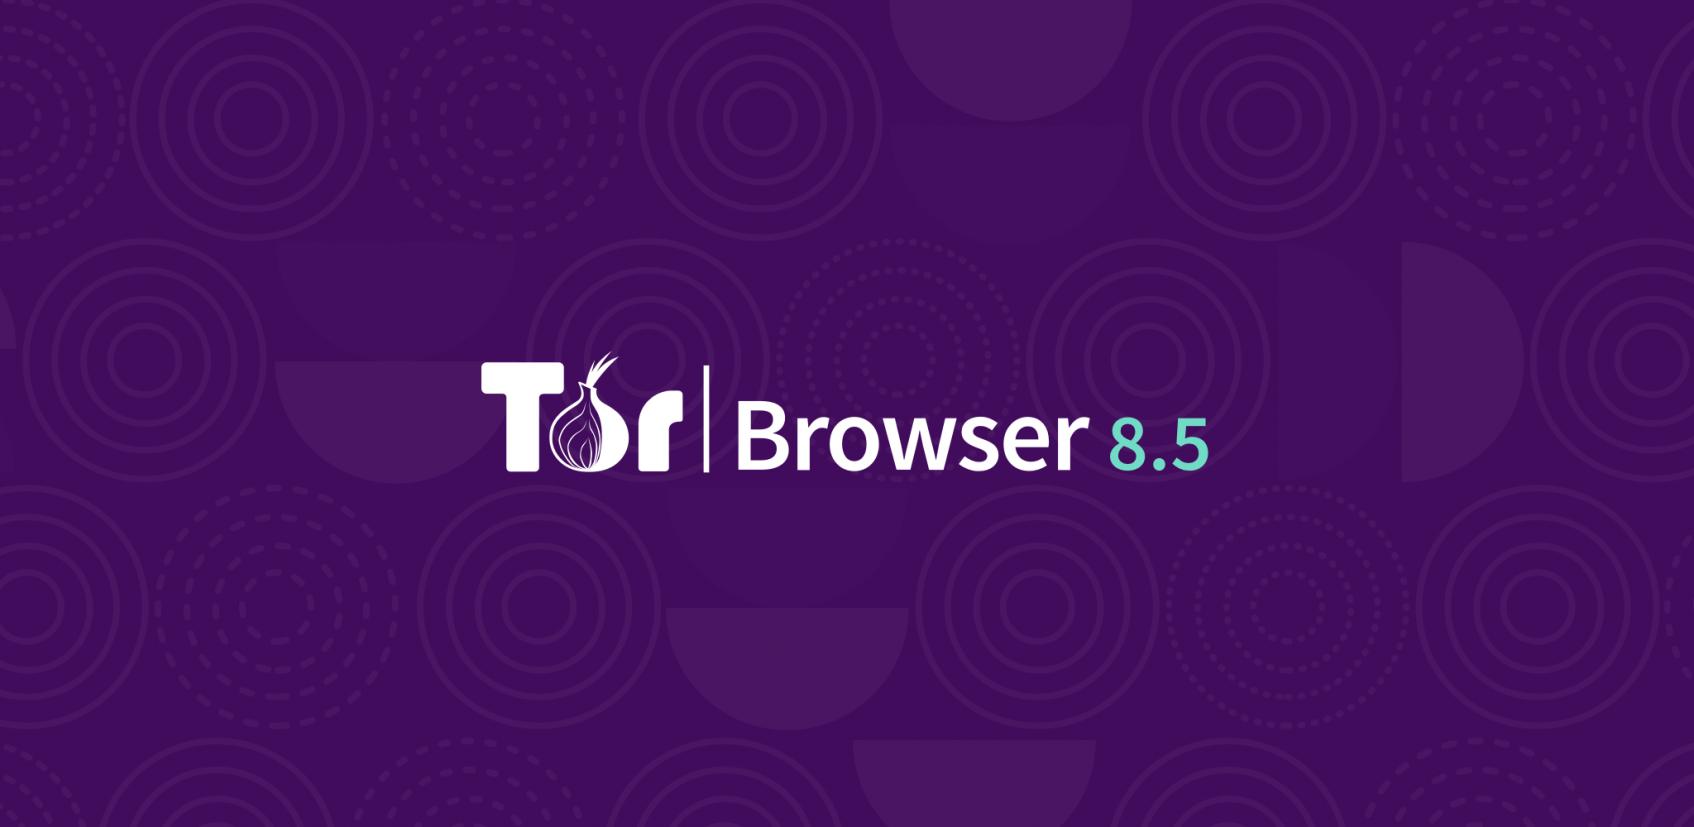 tor browser старая версия скачать андроид